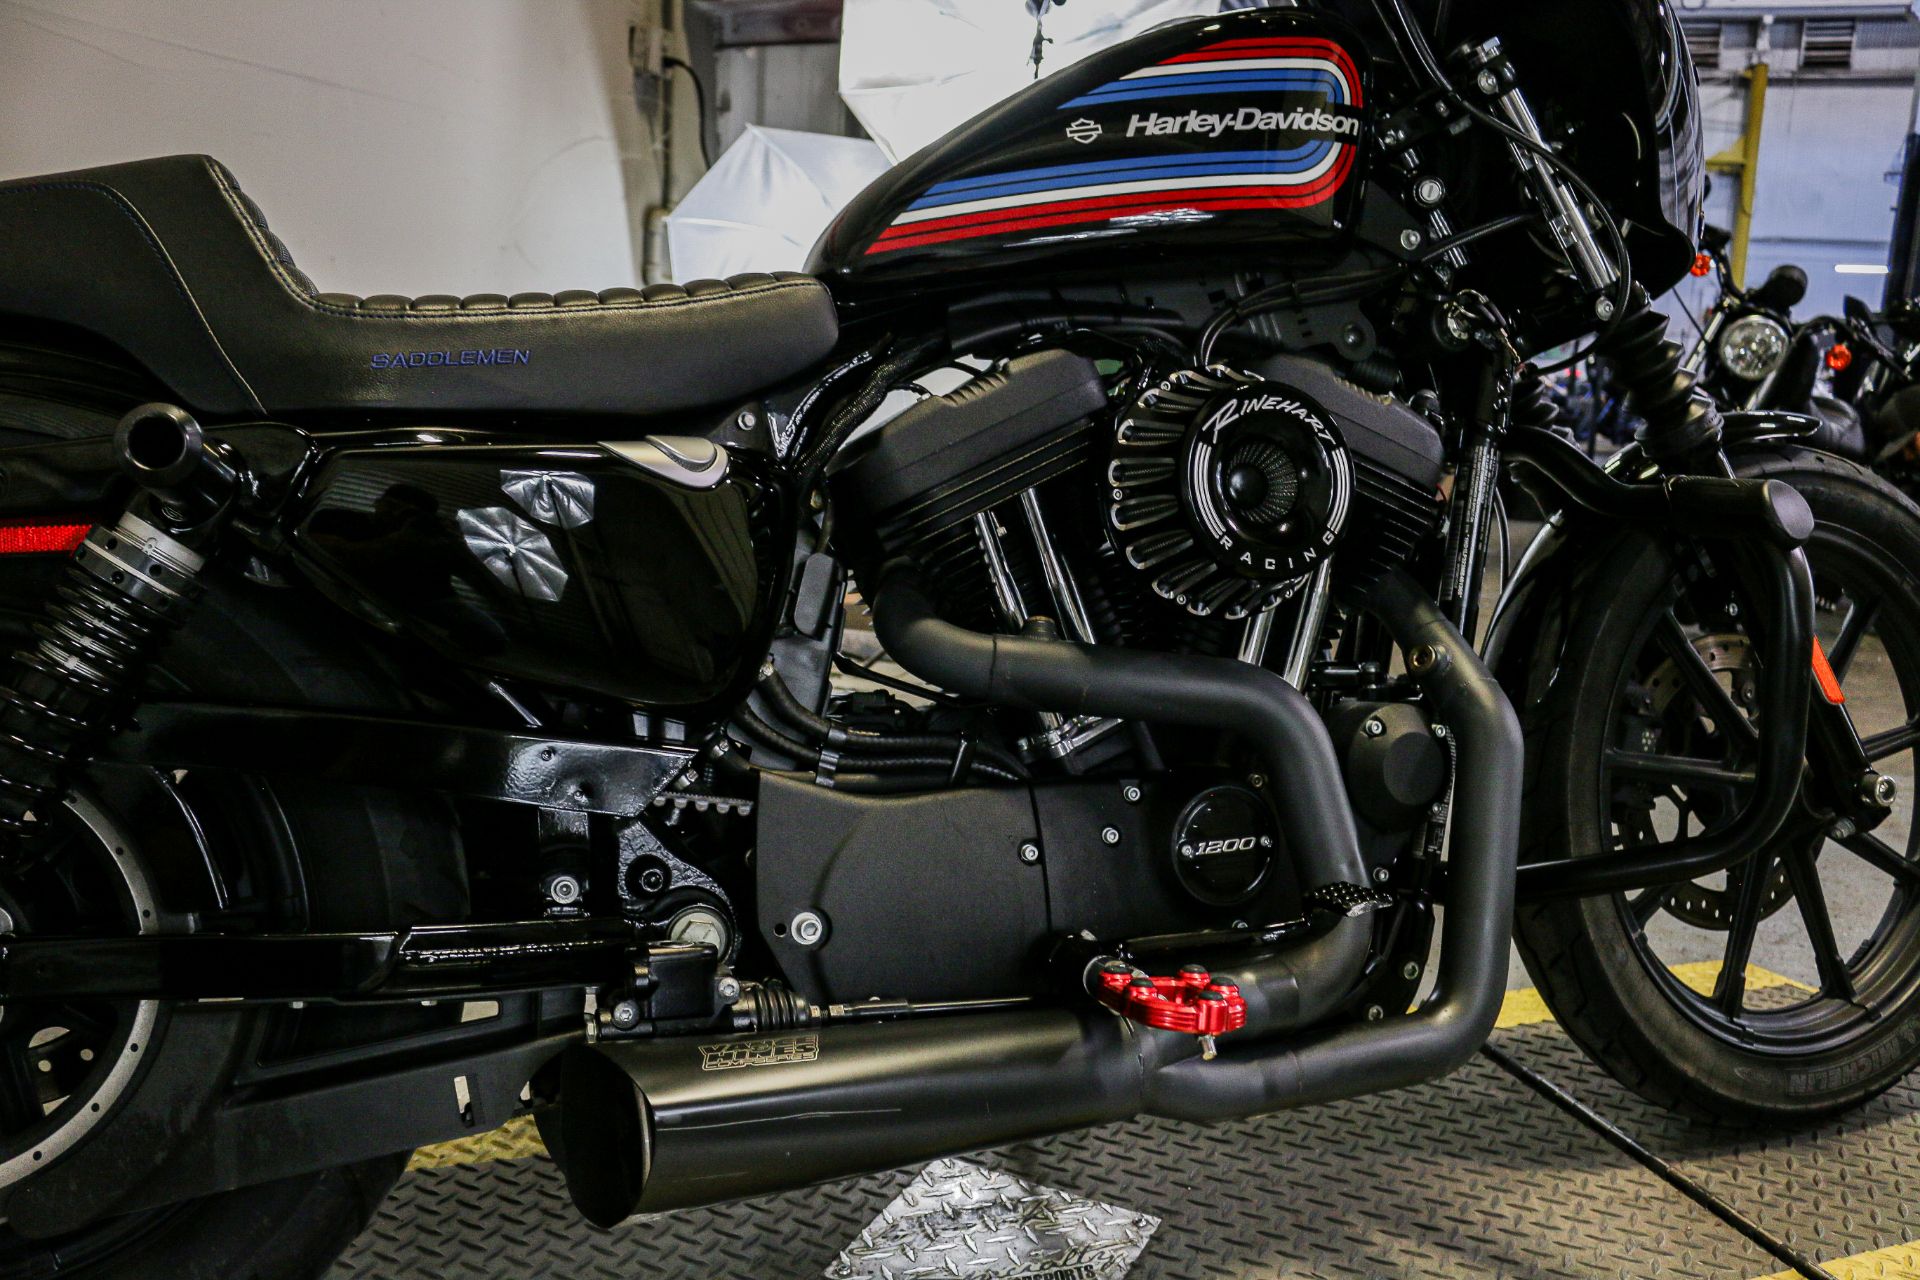 2021 Harley-Davidson Iron 1200™ in Sacramento, California - Photo 8